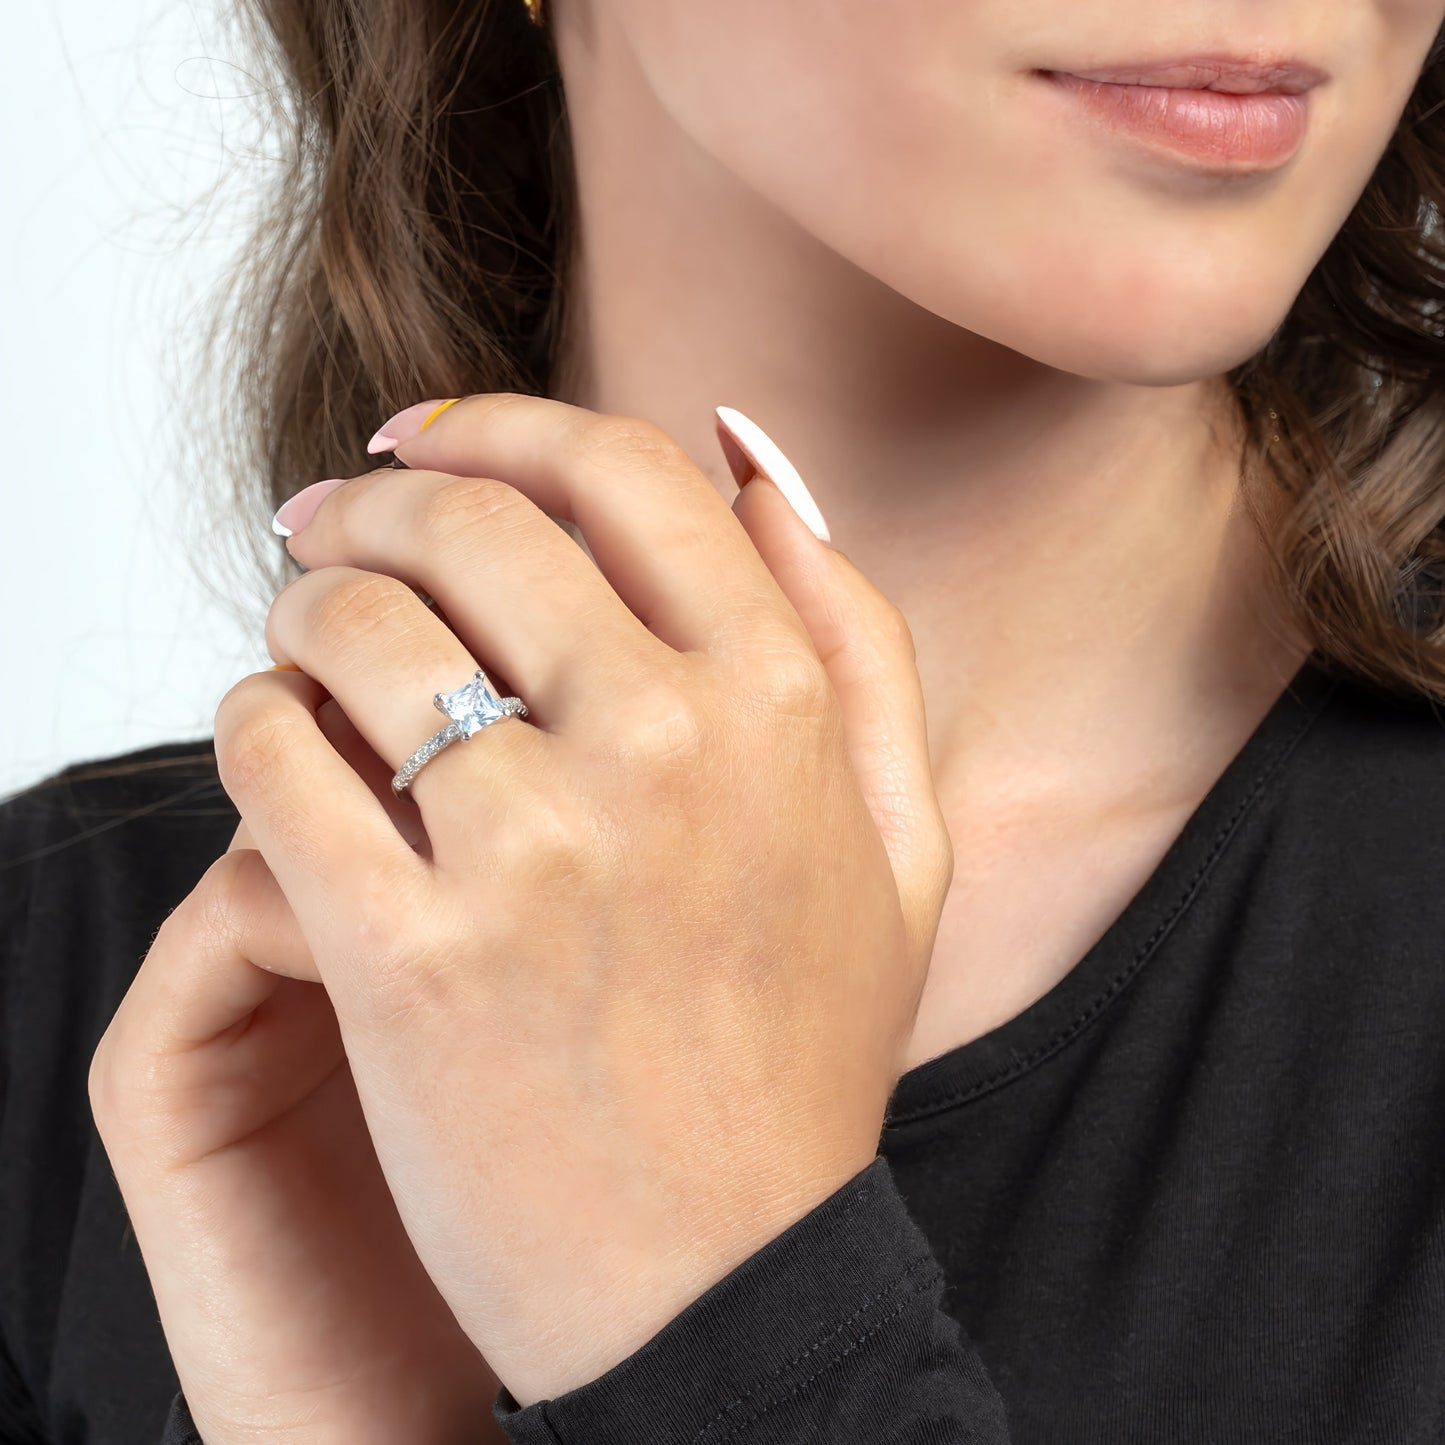 Model wearing Princess Secret Silver Ring on the finger.